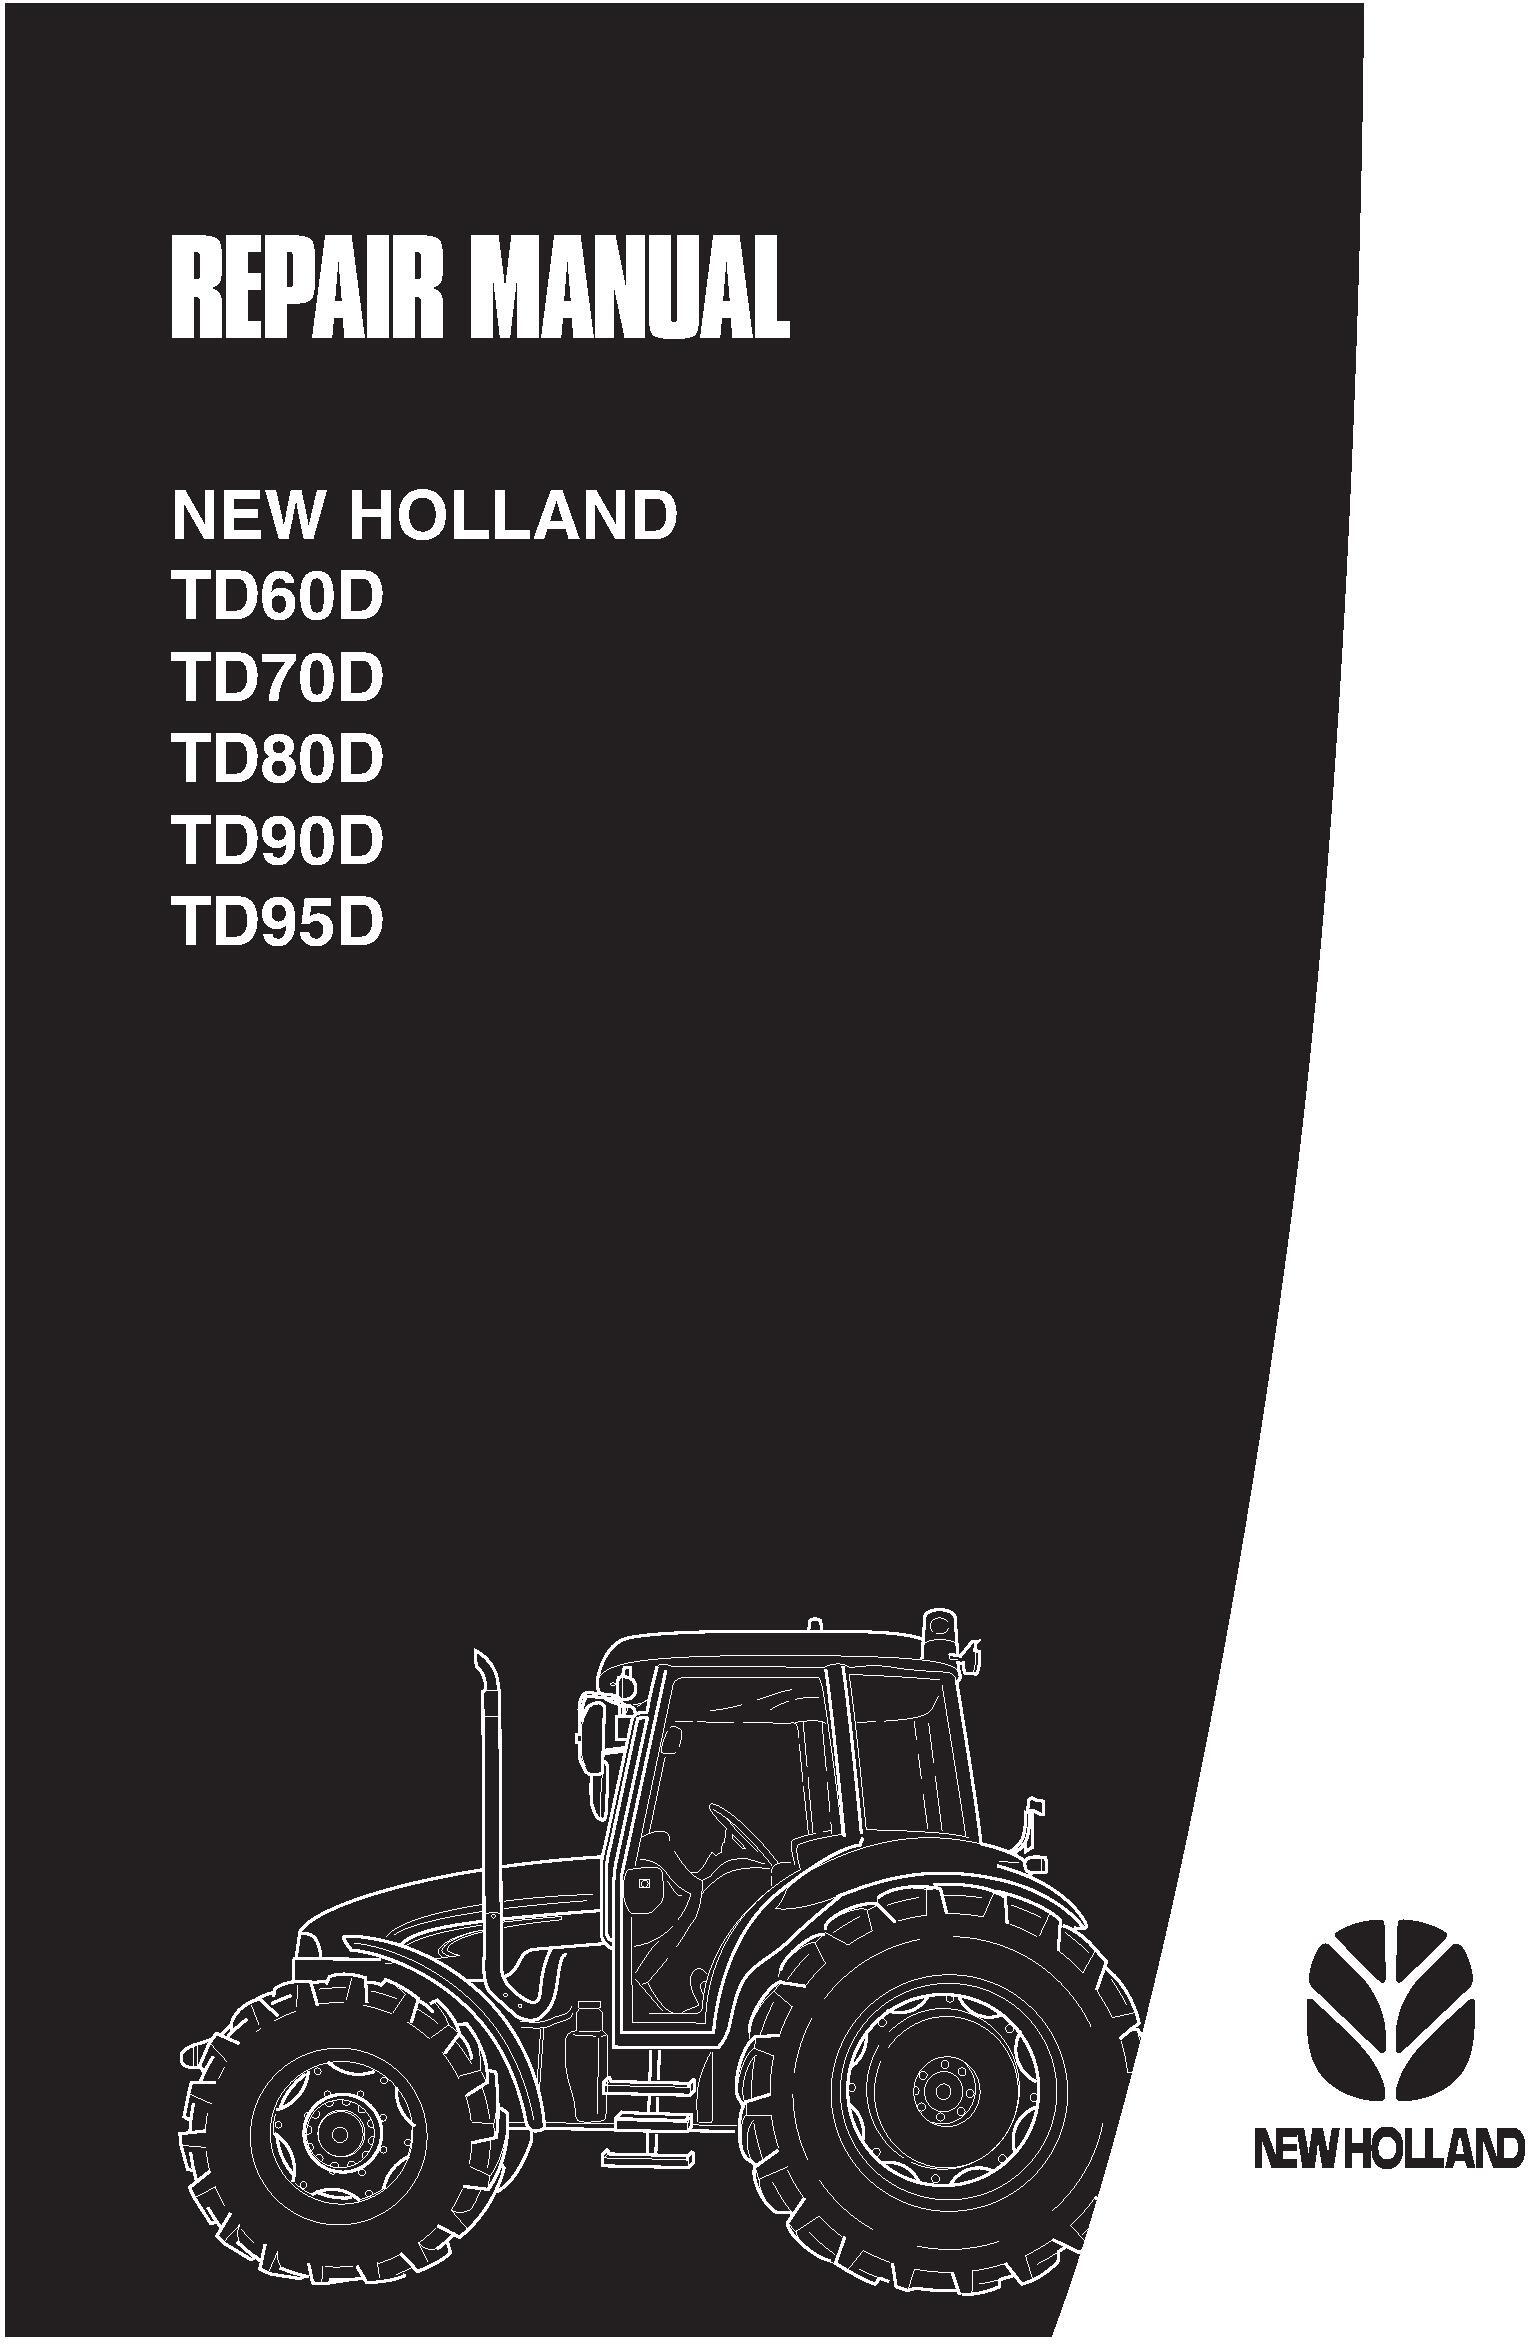 New Holland TD60D, TD70D, TD80D, TD90D, TD95D Tractor Service Manual - 19997